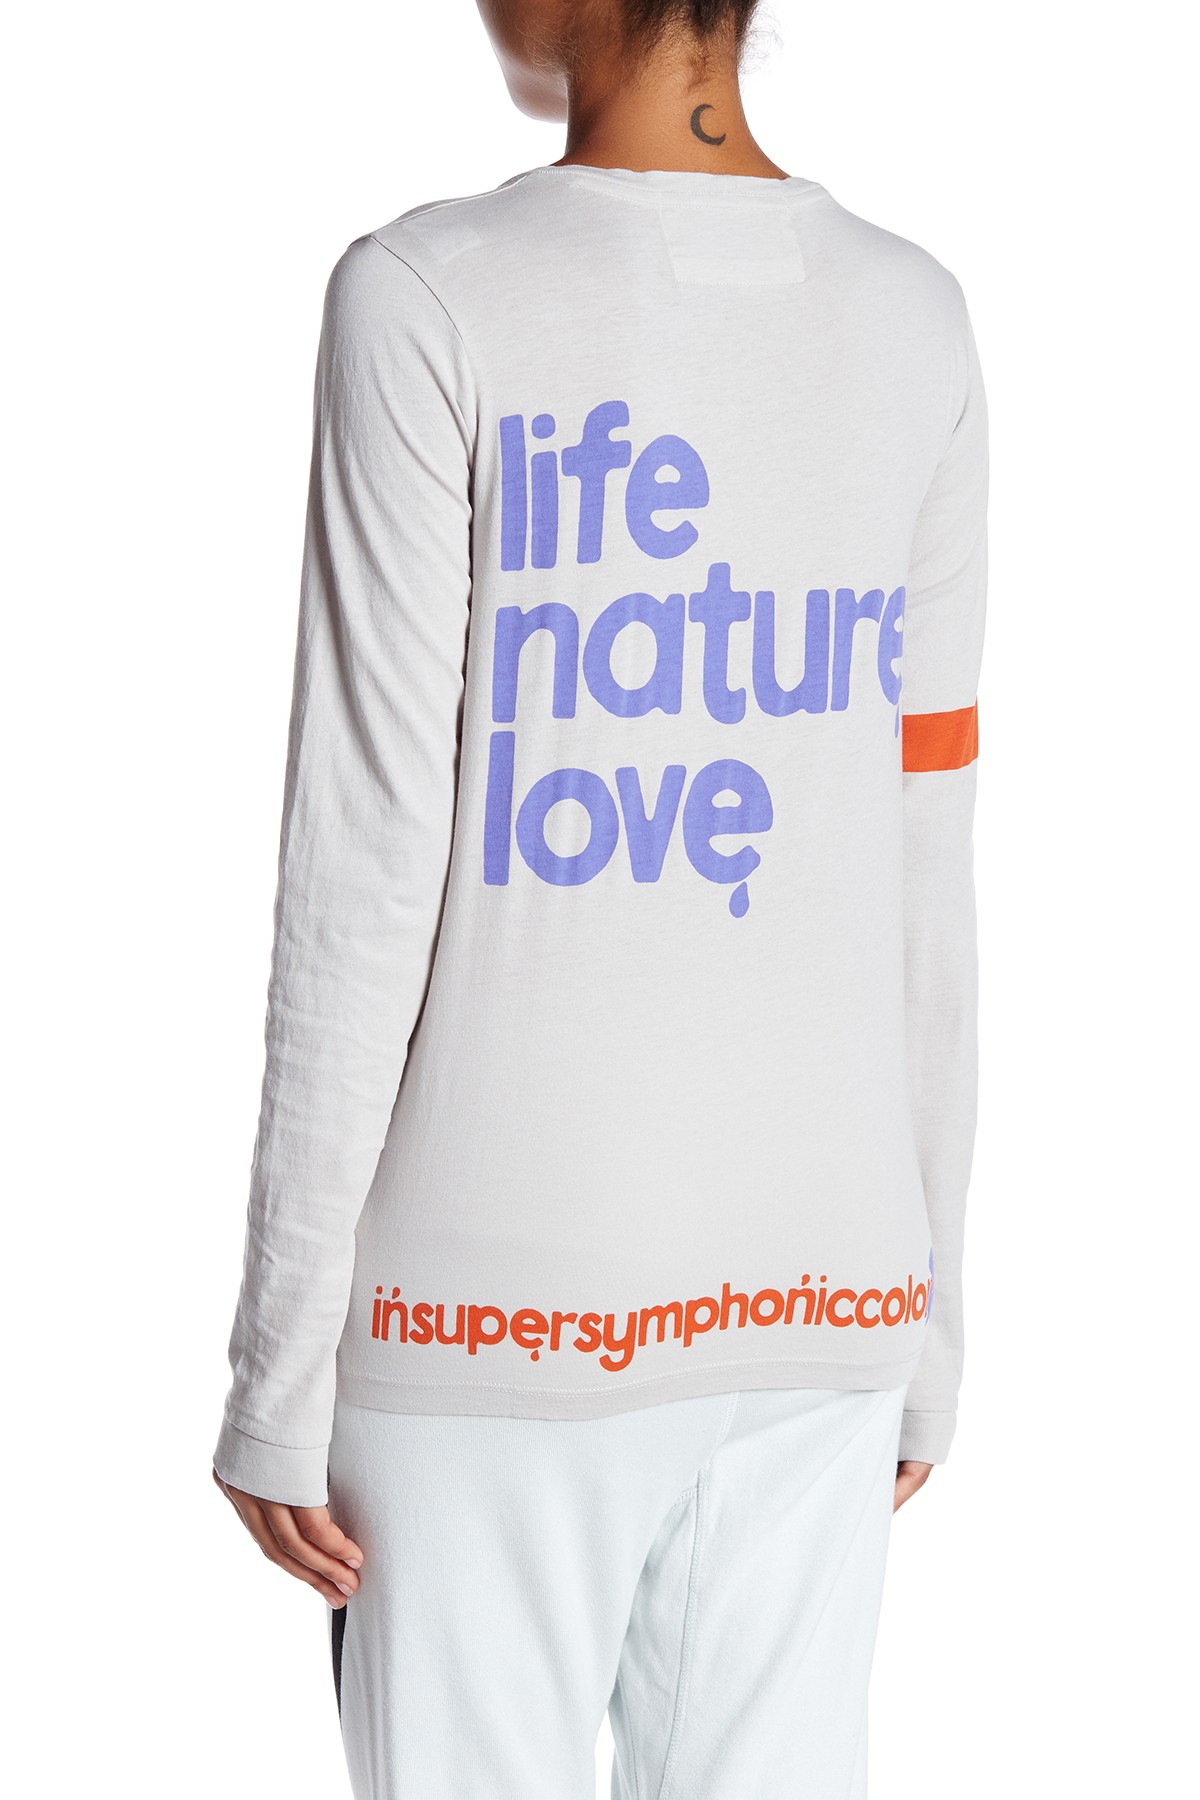 FREE Life Nature Love Long Sleeve Shirt |